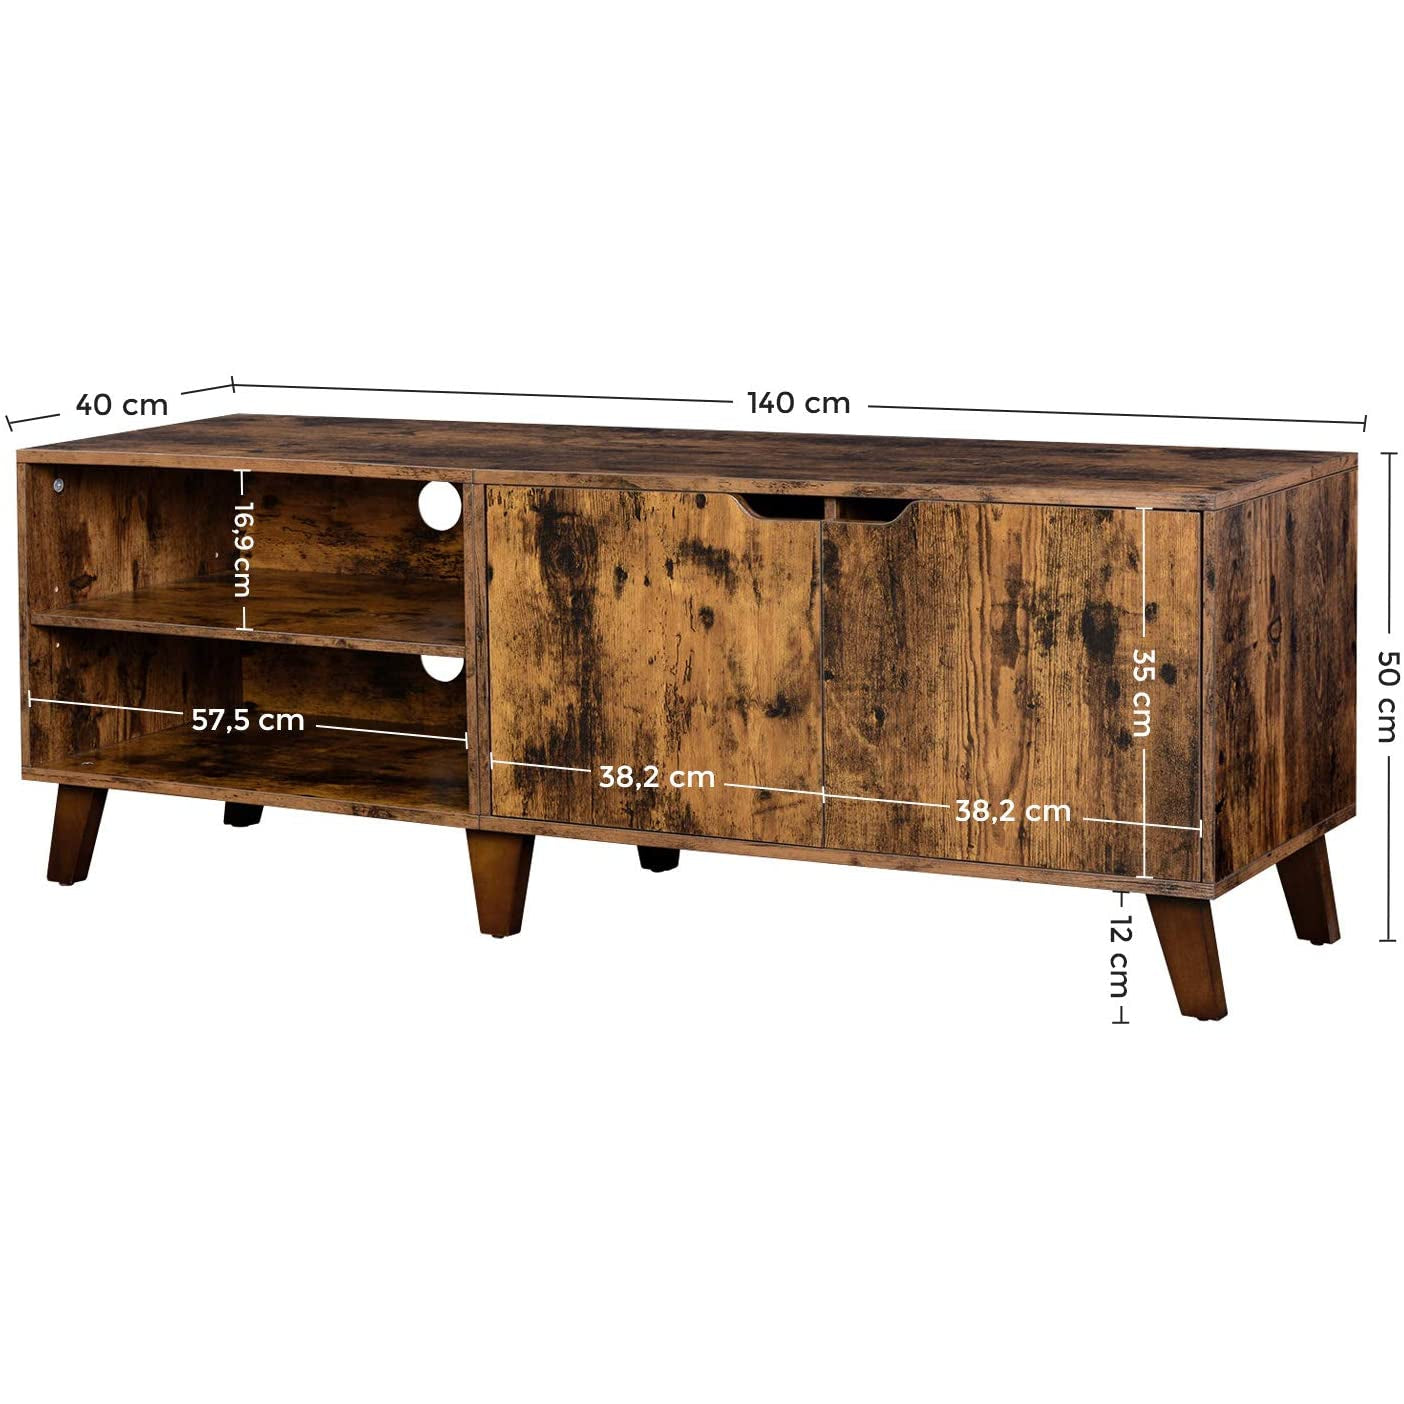 Nancy's Big Oaks 2 TV Cabinet - TV Furniture Industrial - TV Table Retro - Industrial - Brown - 140 x 40 x 50 cm 